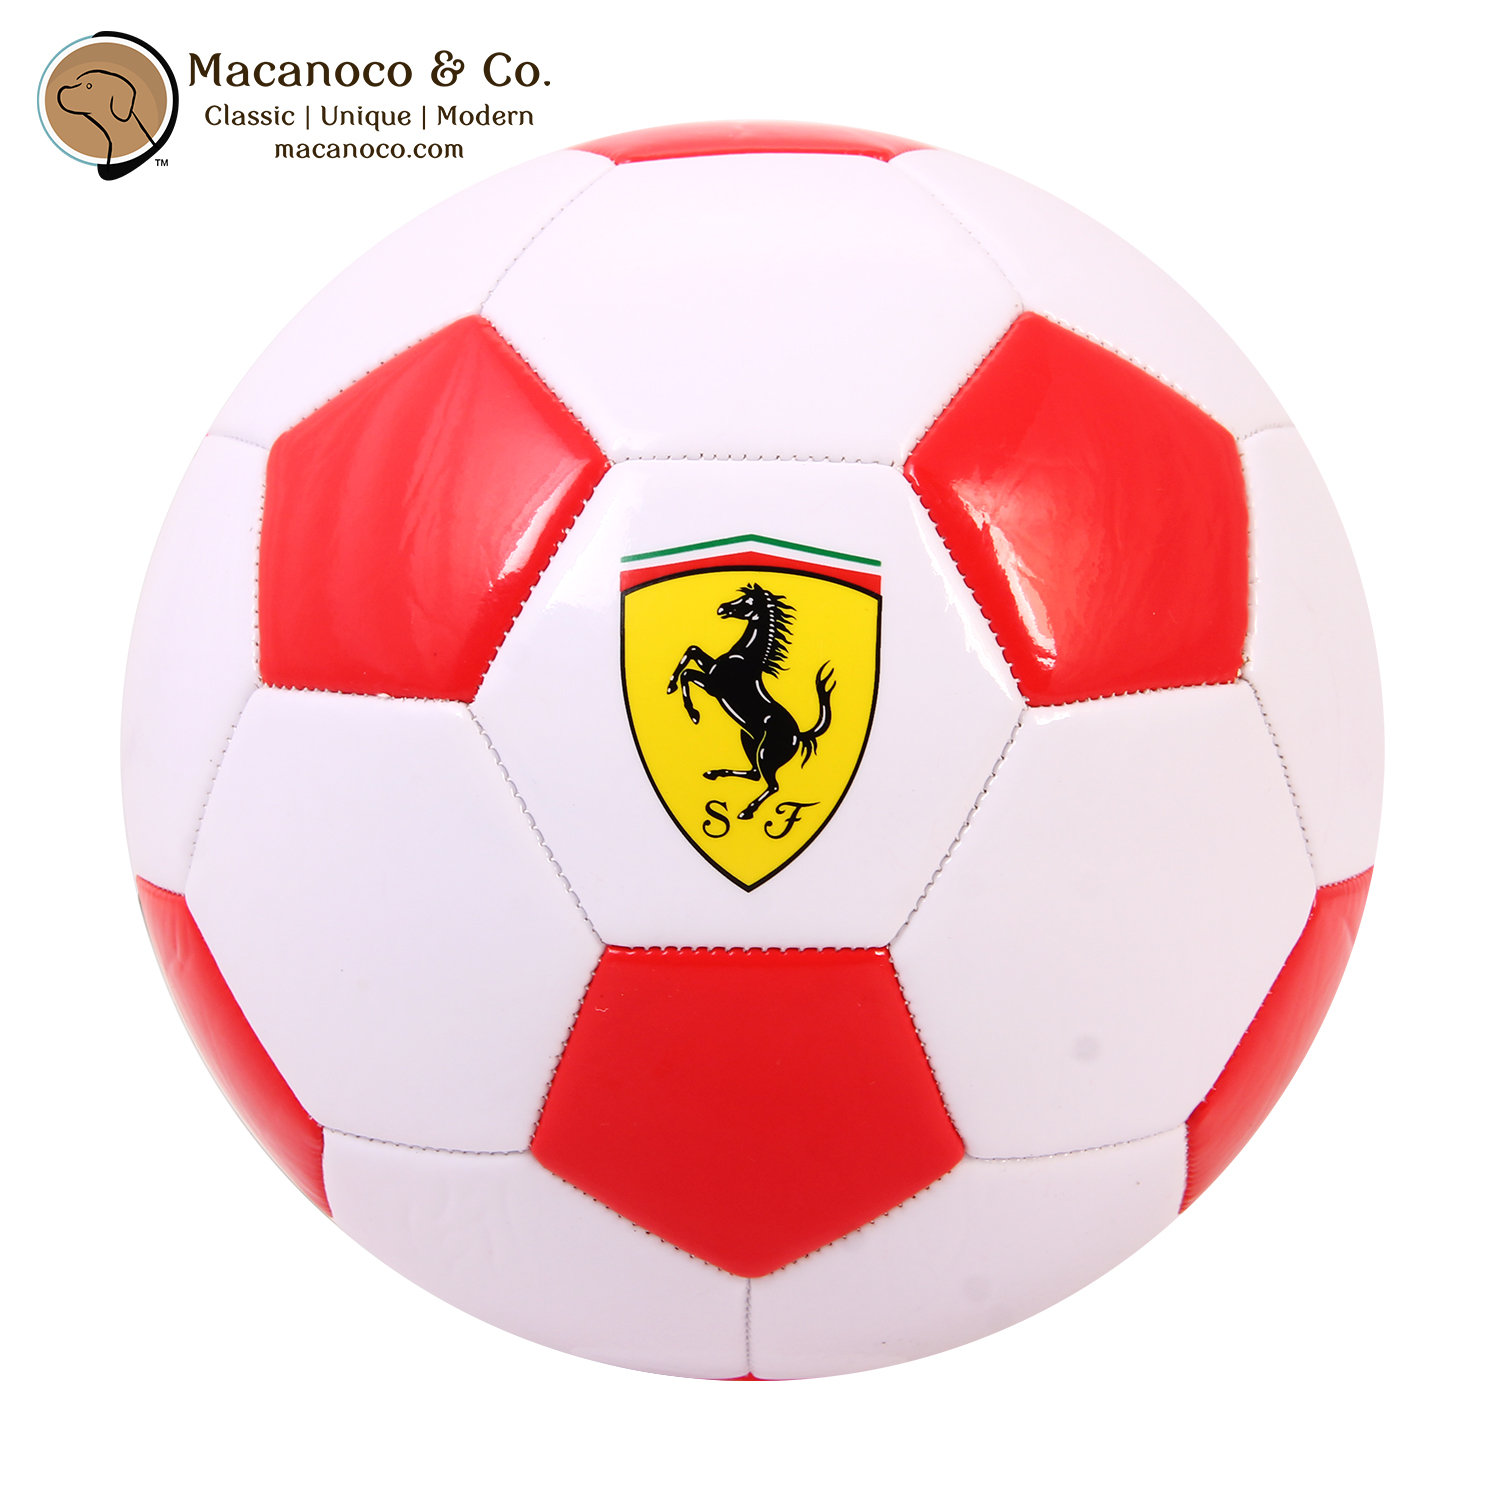 Ferrari Classic Color Size 5 Soccer Ball White/Red - Macanoco and Co.